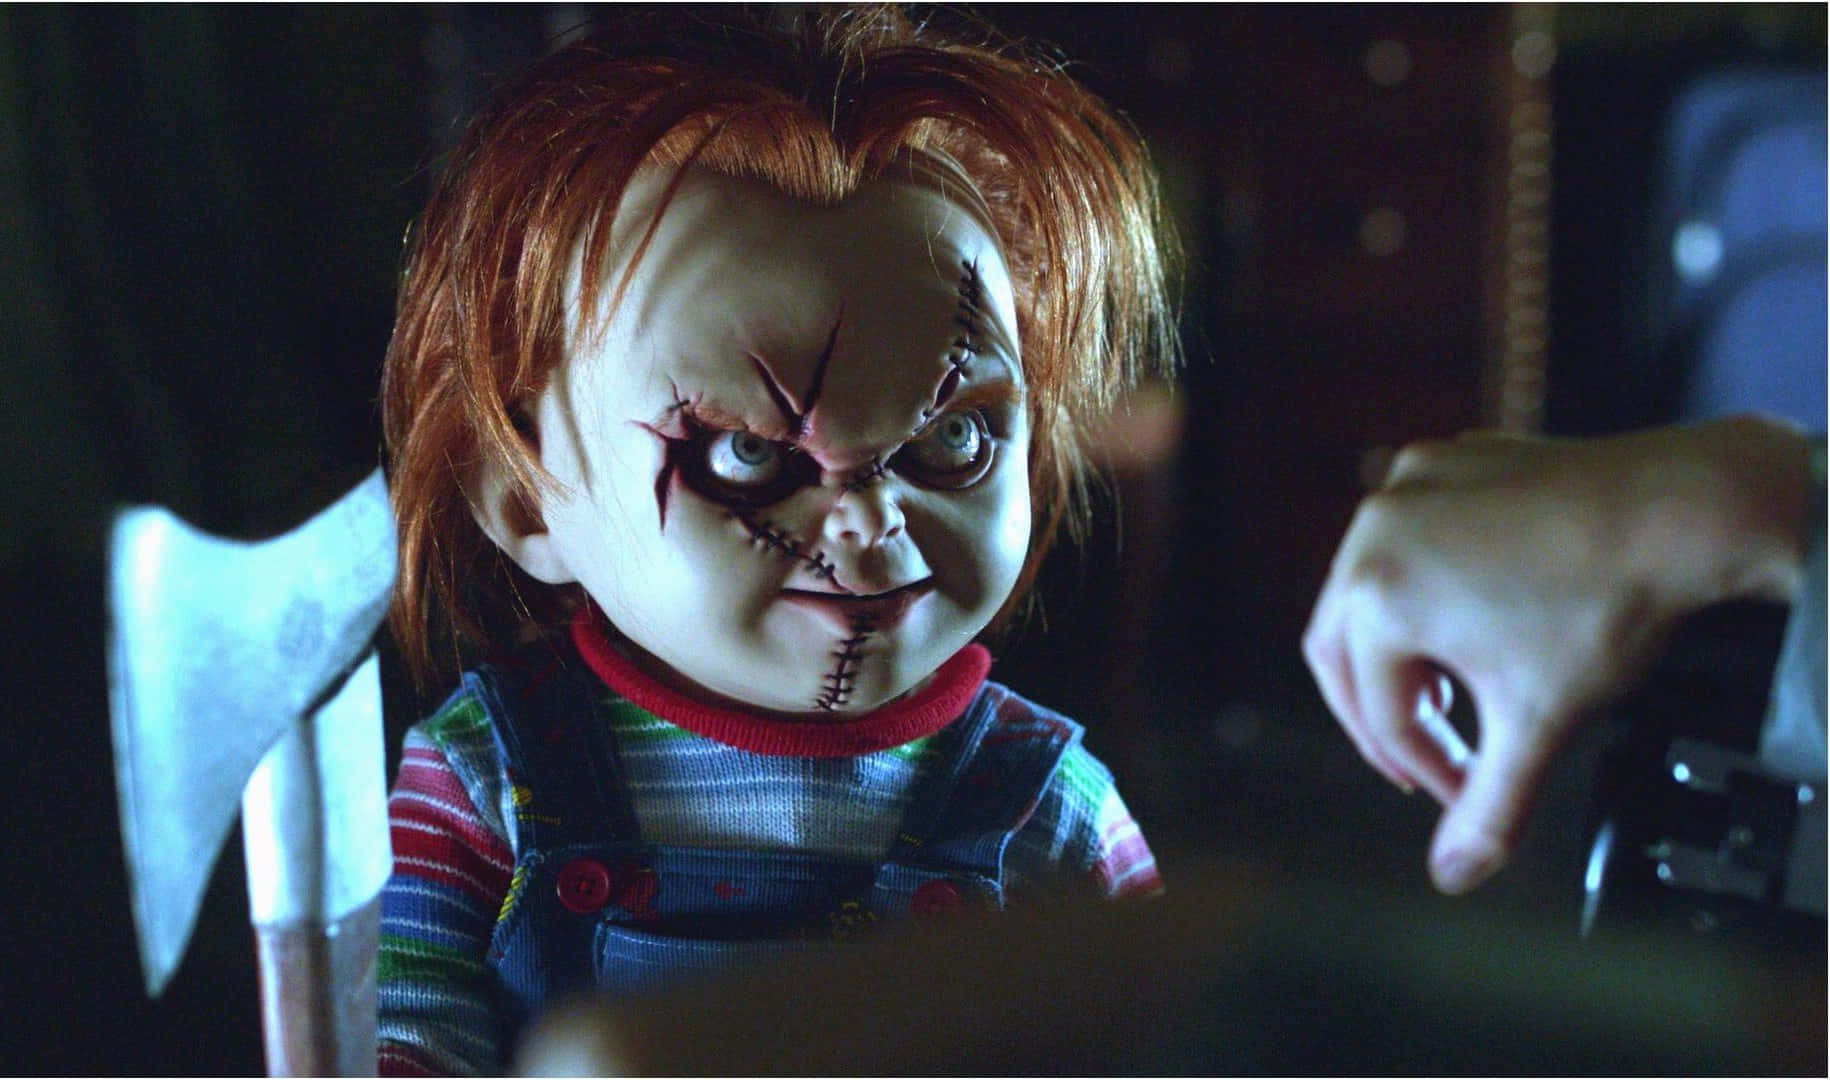 Mød den verdensberømte horrorsymboler Chucky. Wallpaper